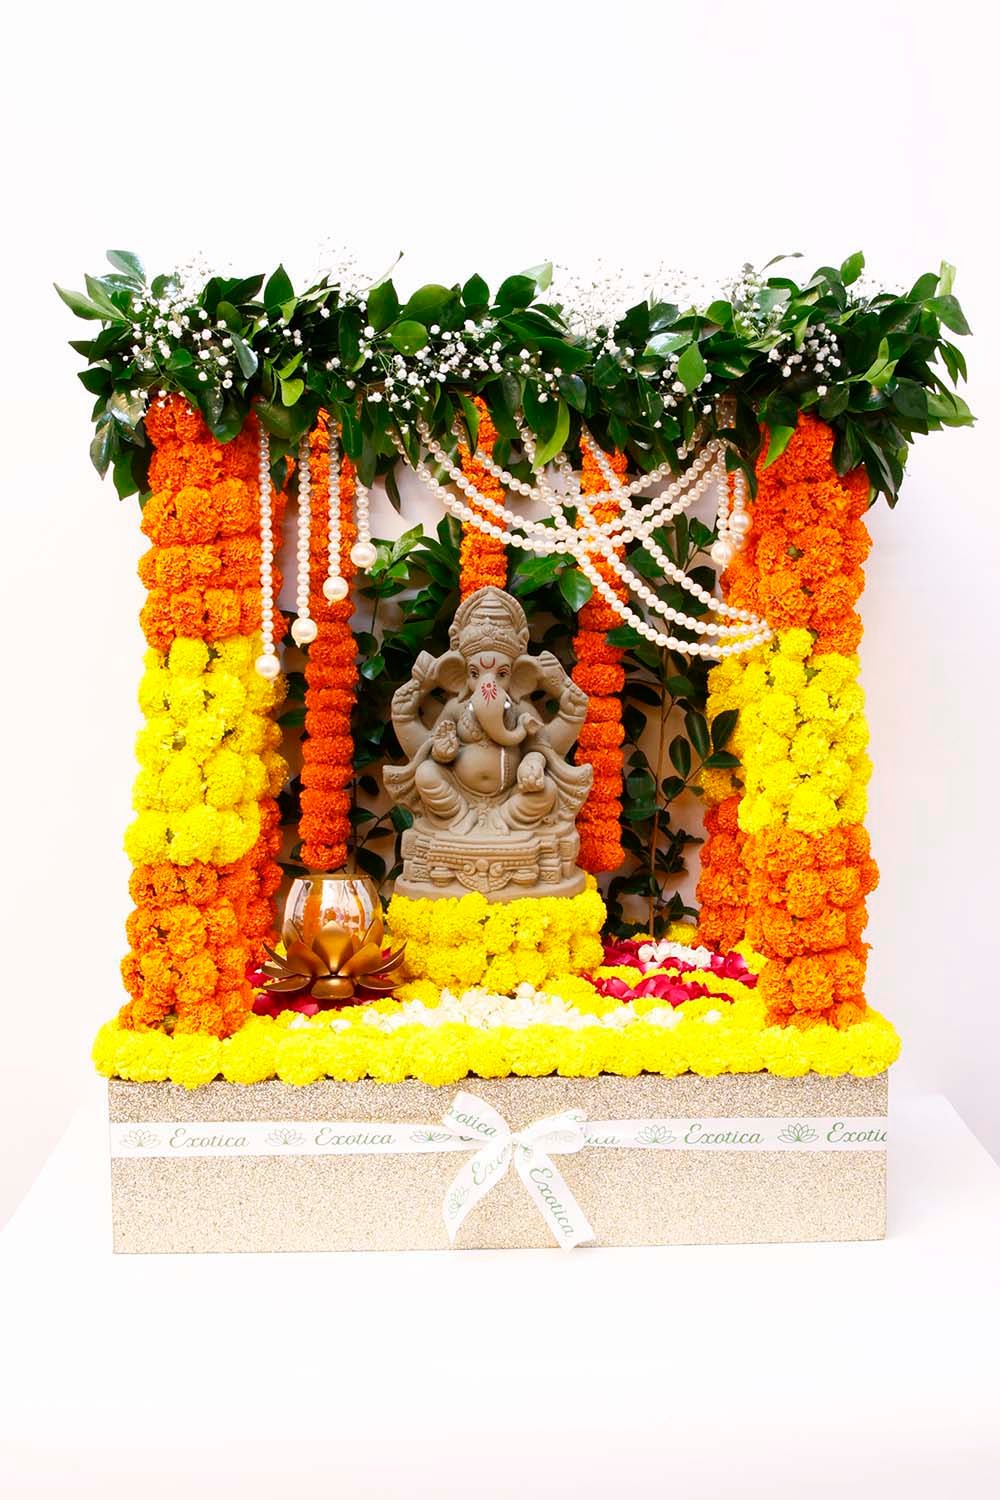 Buy Ganeshji Mandap Online at Low Prices - Exotica Flower